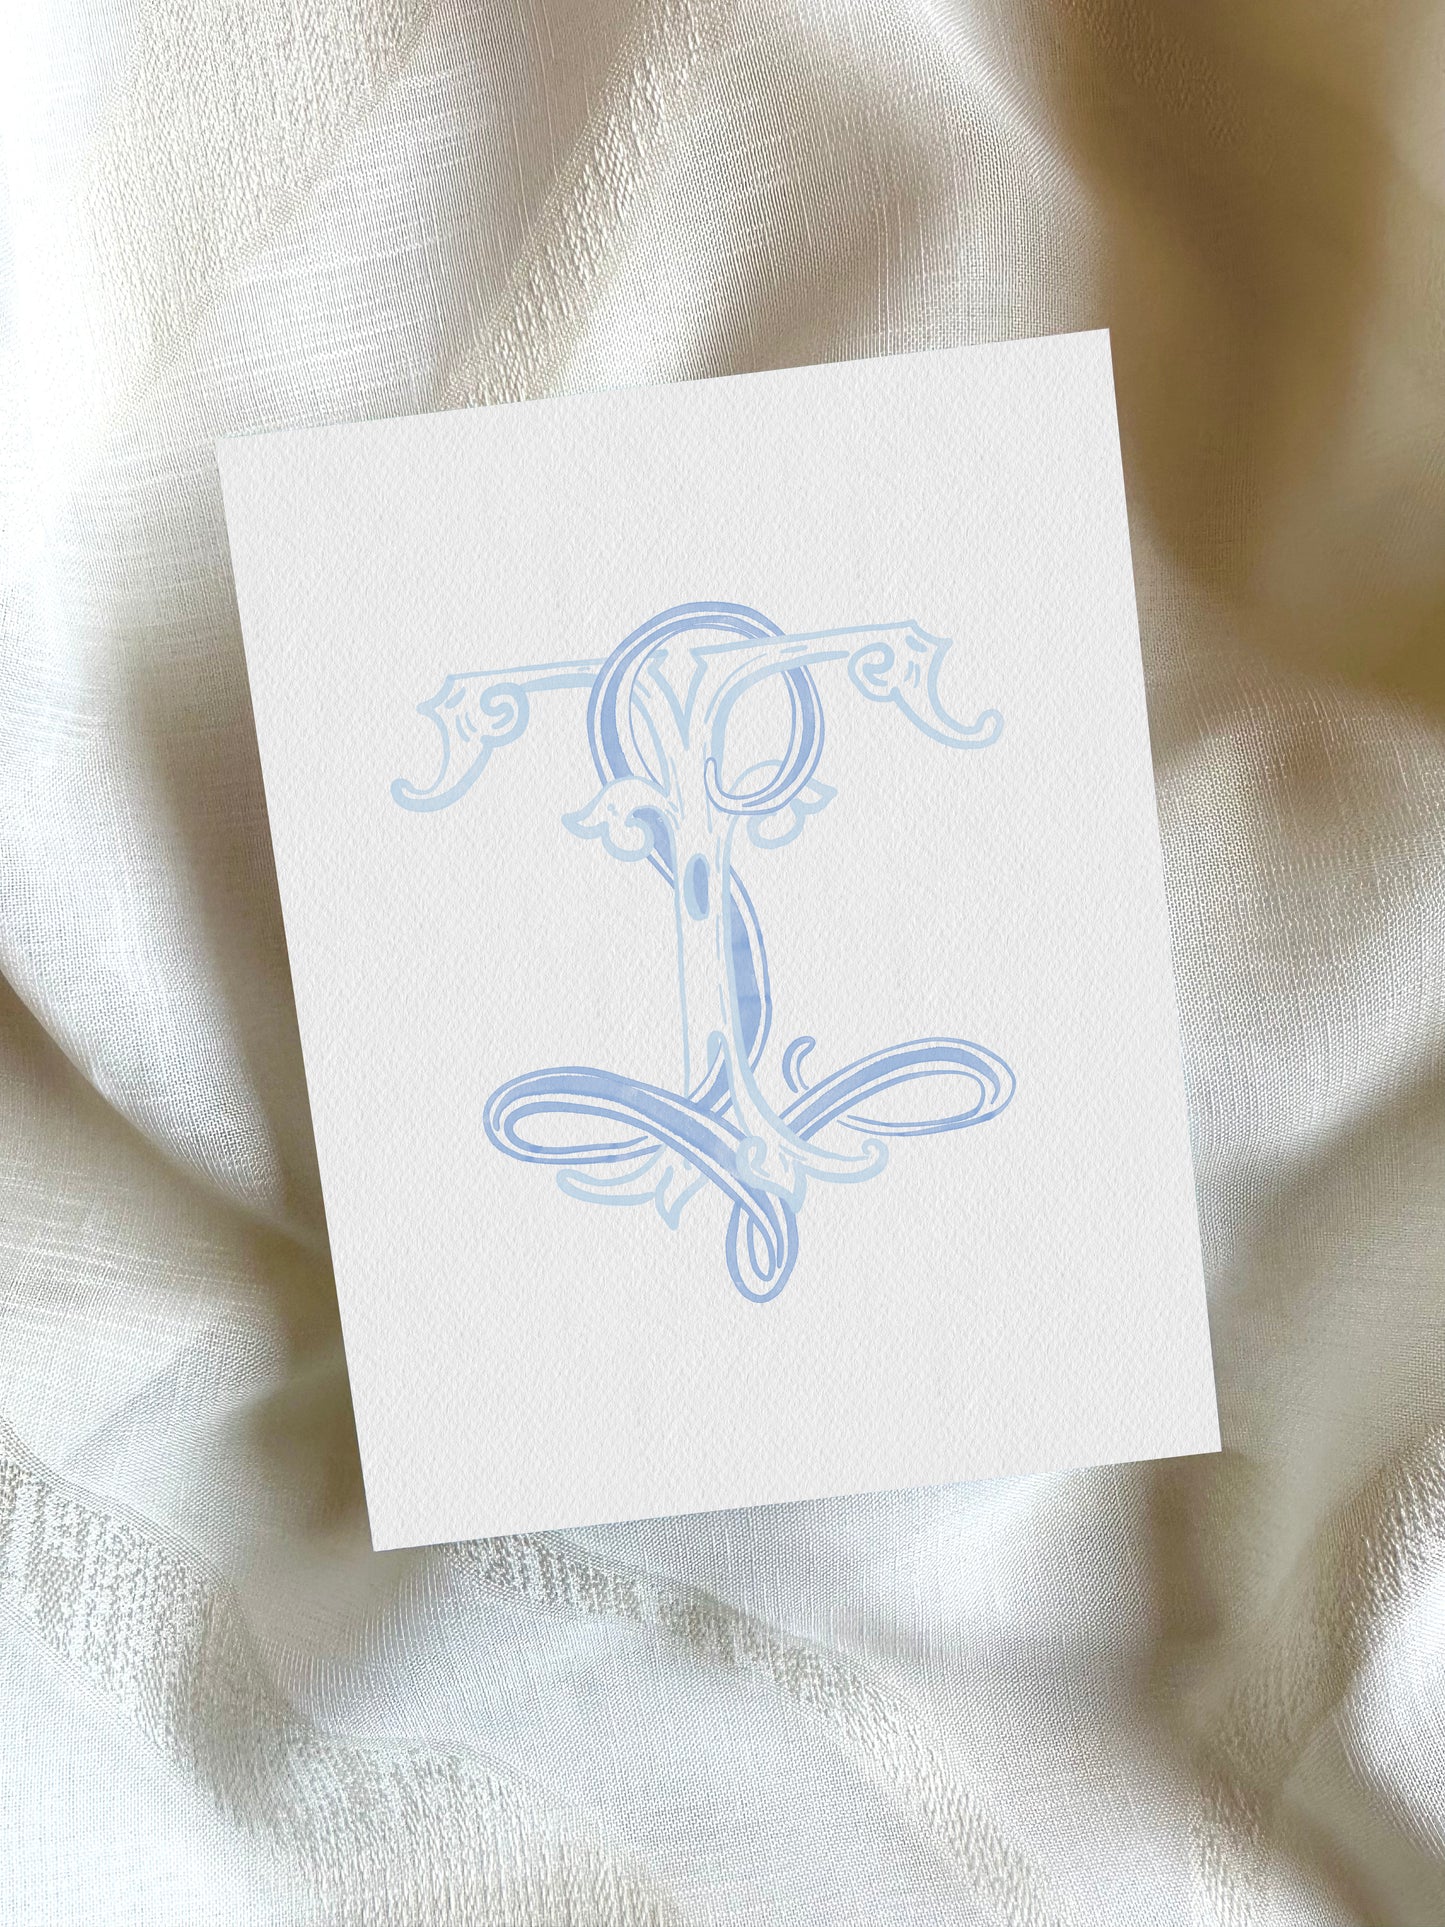 2 Letter Monogram with Letters LT TL | Digital Download - Wedding Monogram SVG, Personal Logo, Wedding Logo for Wedding Invitations The Wedding Crest Lab